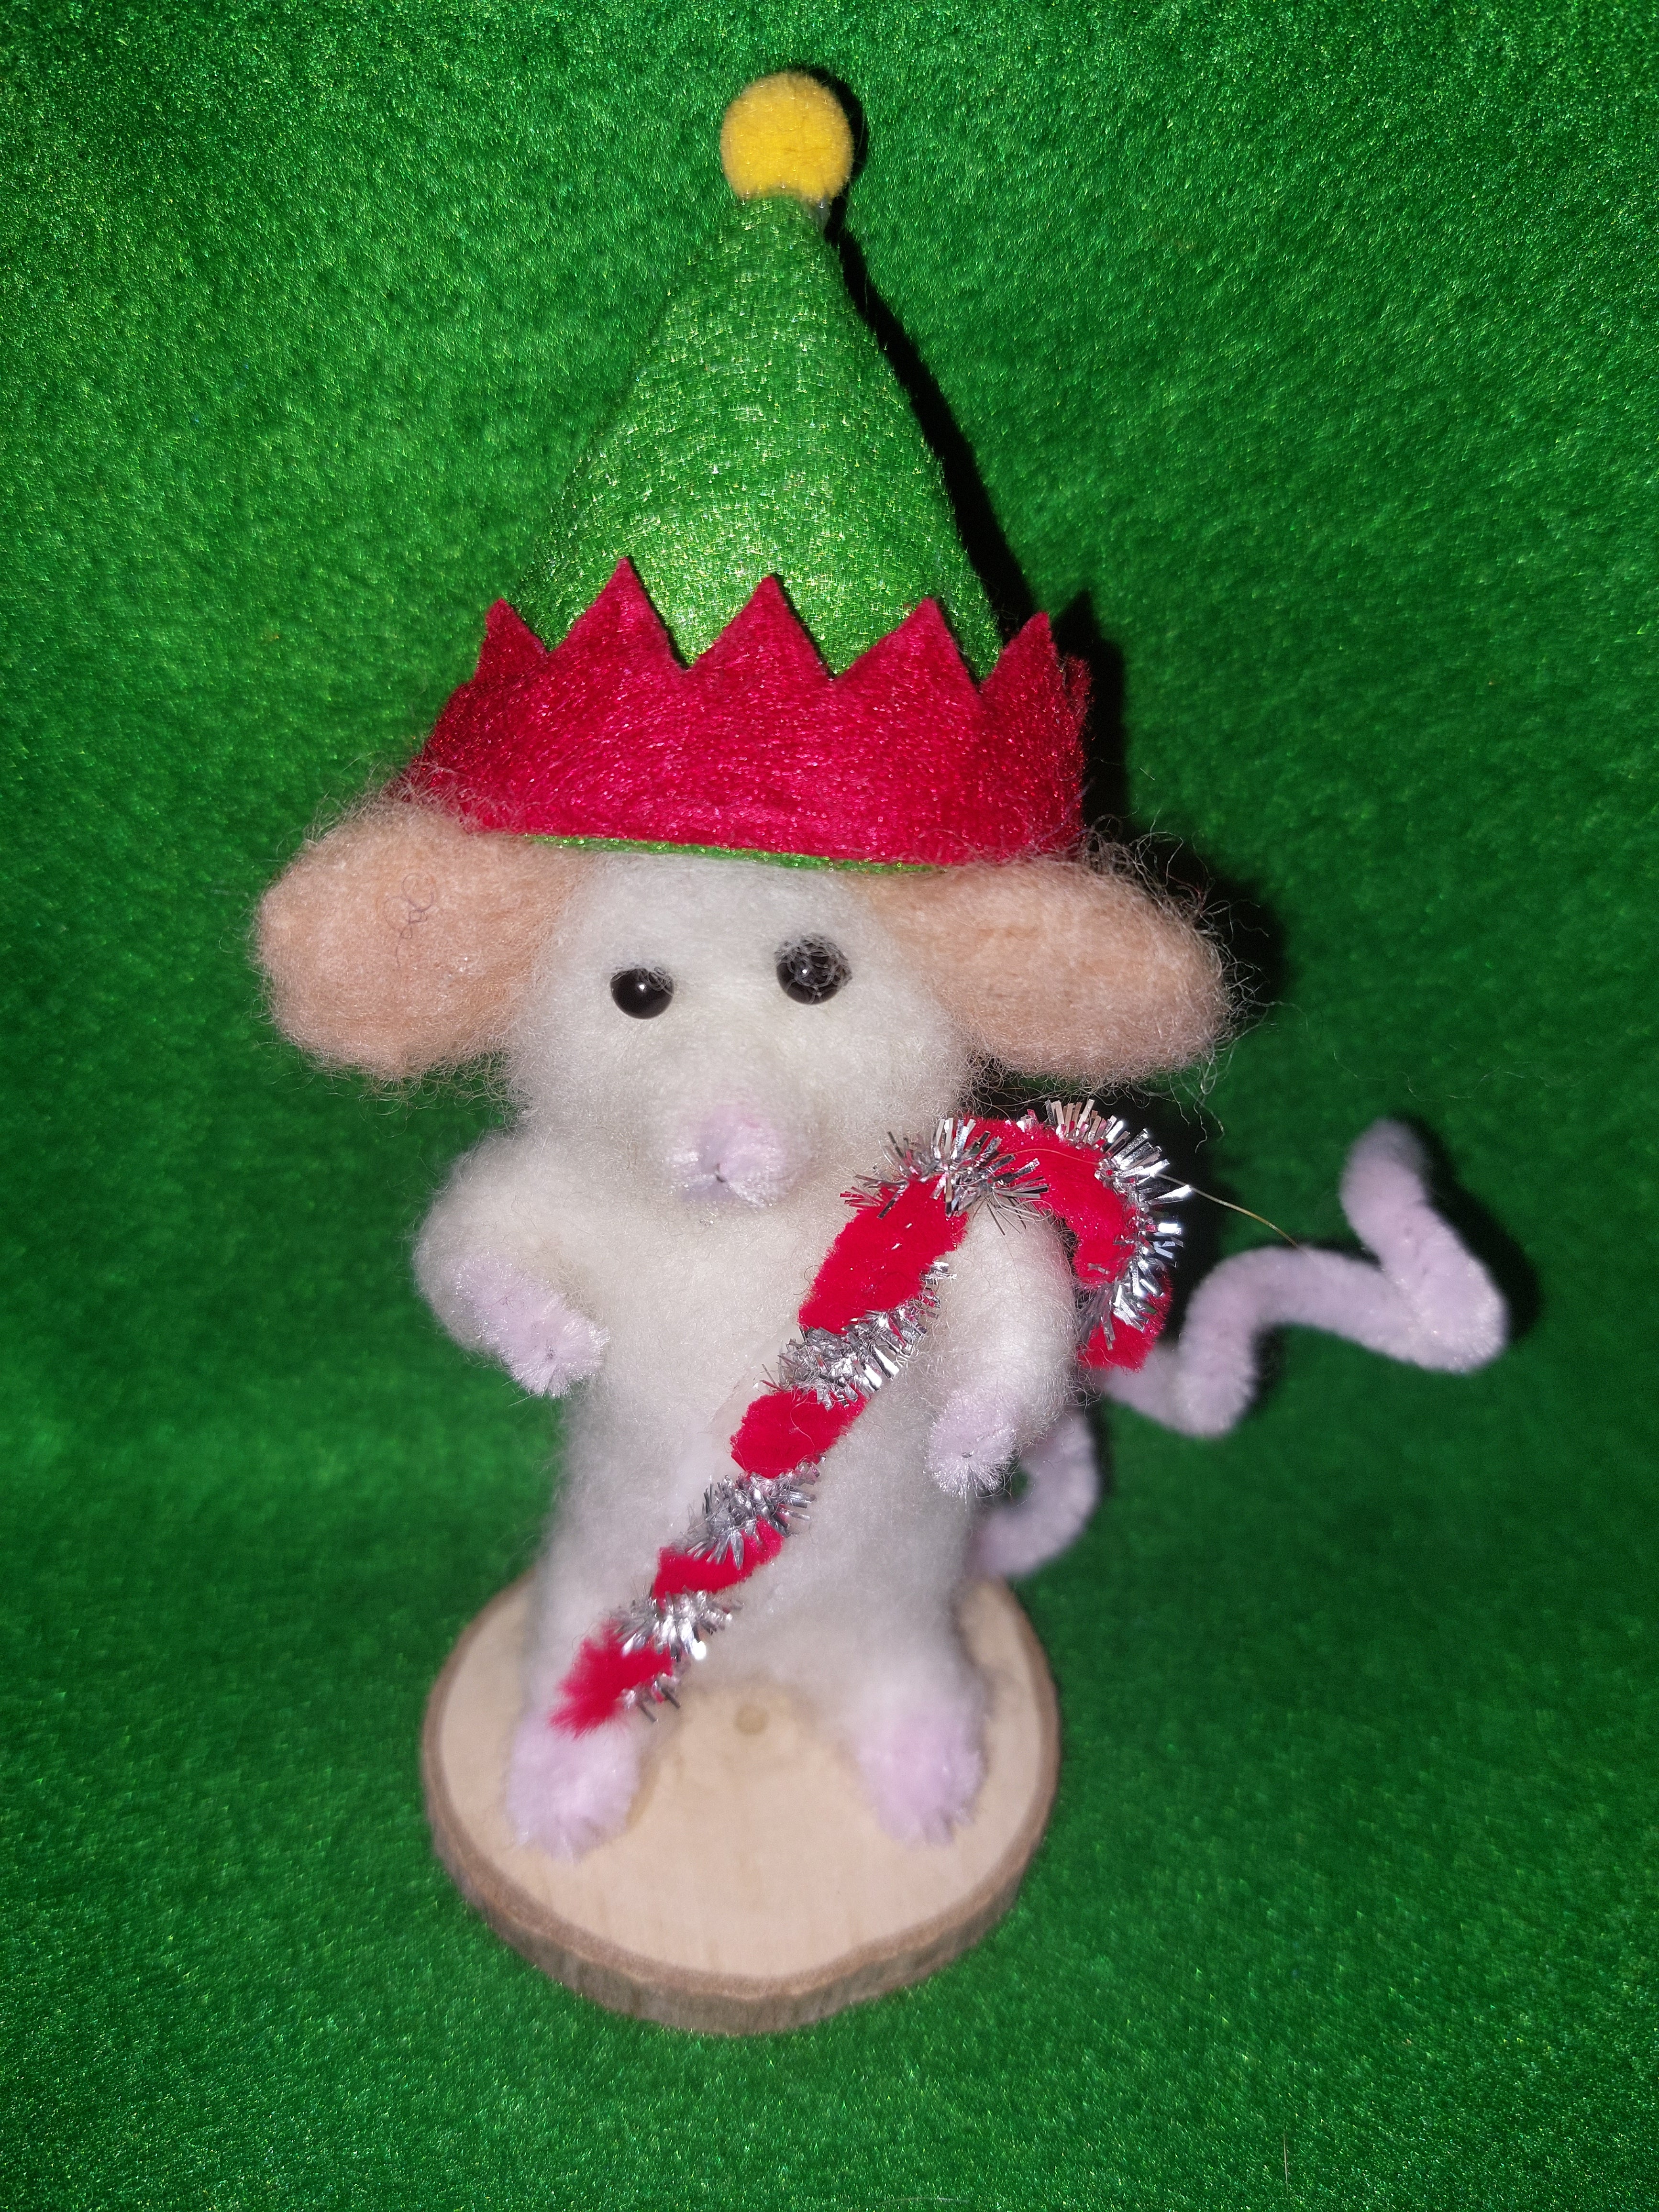 Felt Mice Ornament - Knitting Mouse Ornament